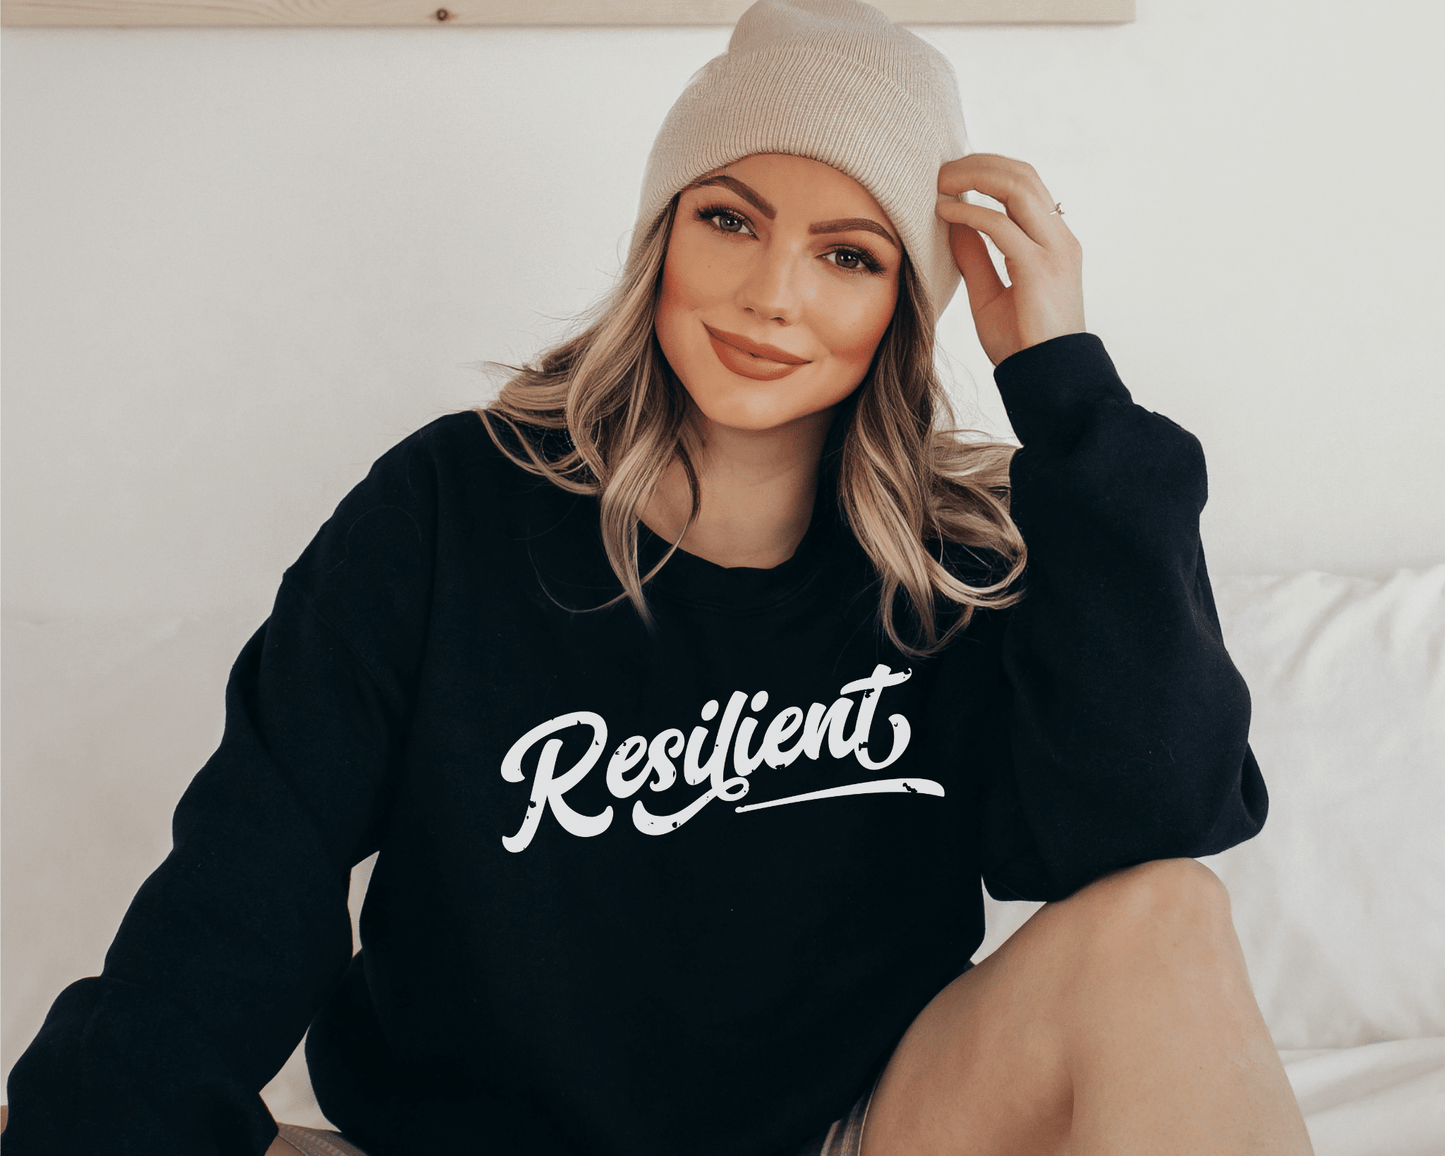 Resilient Sweatshirt in Black